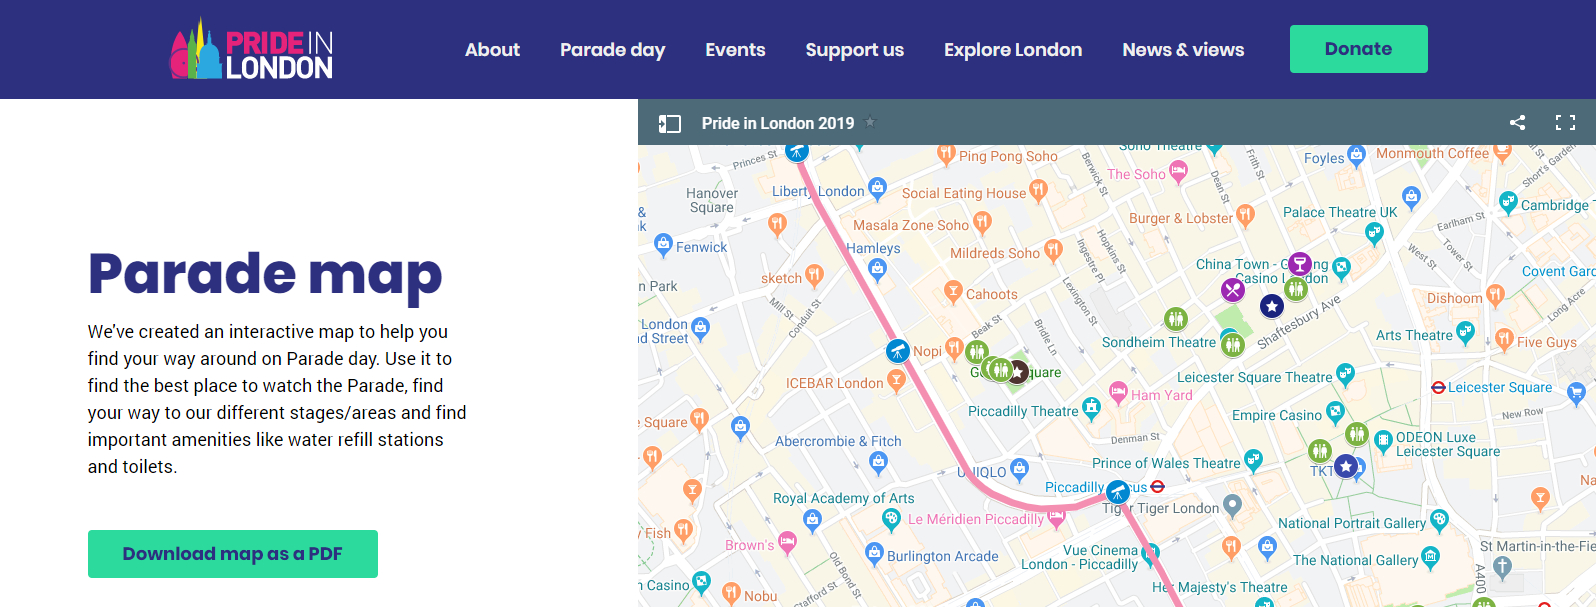 Pride in London webpage map